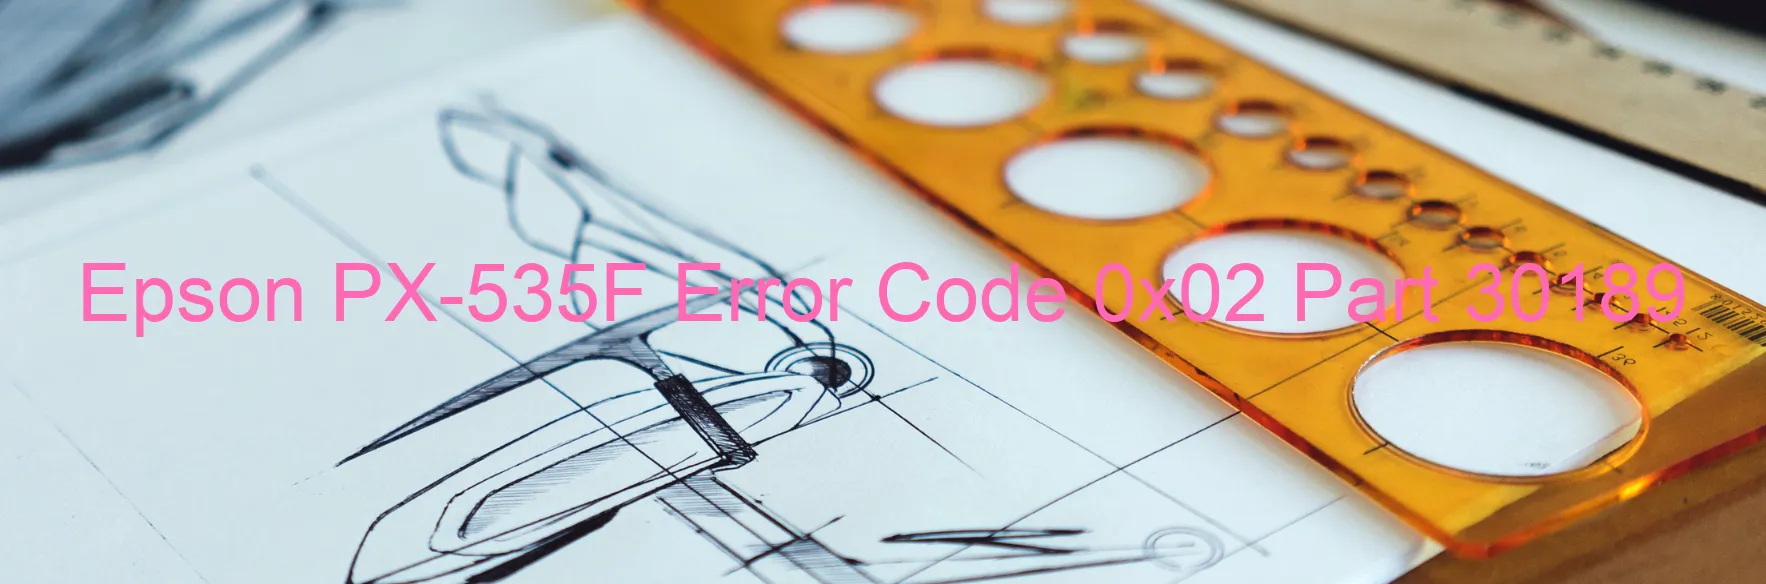 Epson PX-535F Code d'erreur 0x02